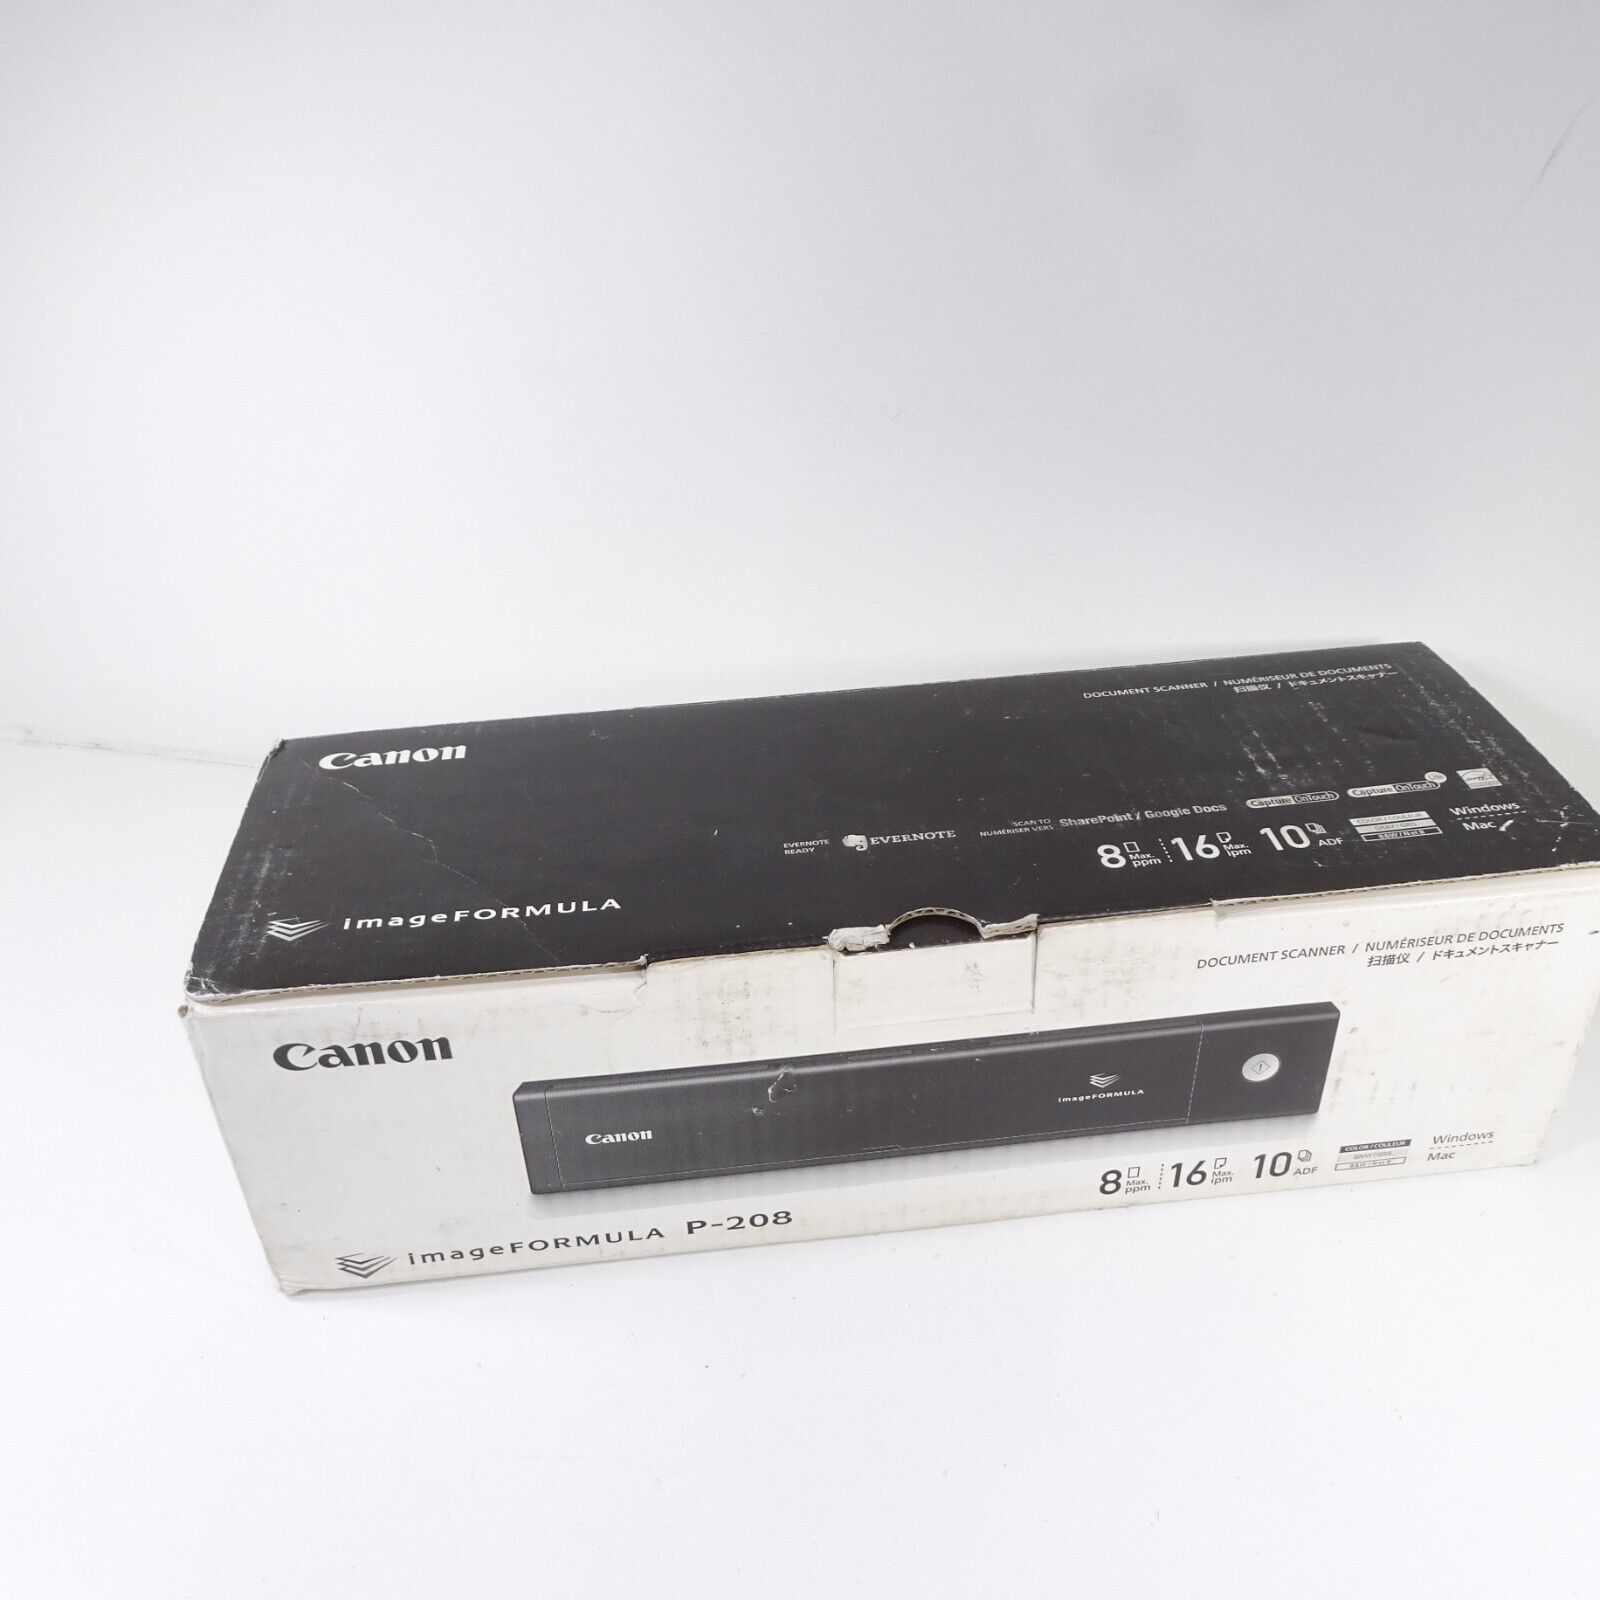 Canon imageFORMULA P-208II Scan-Tini Handheld Personal Duplex ...